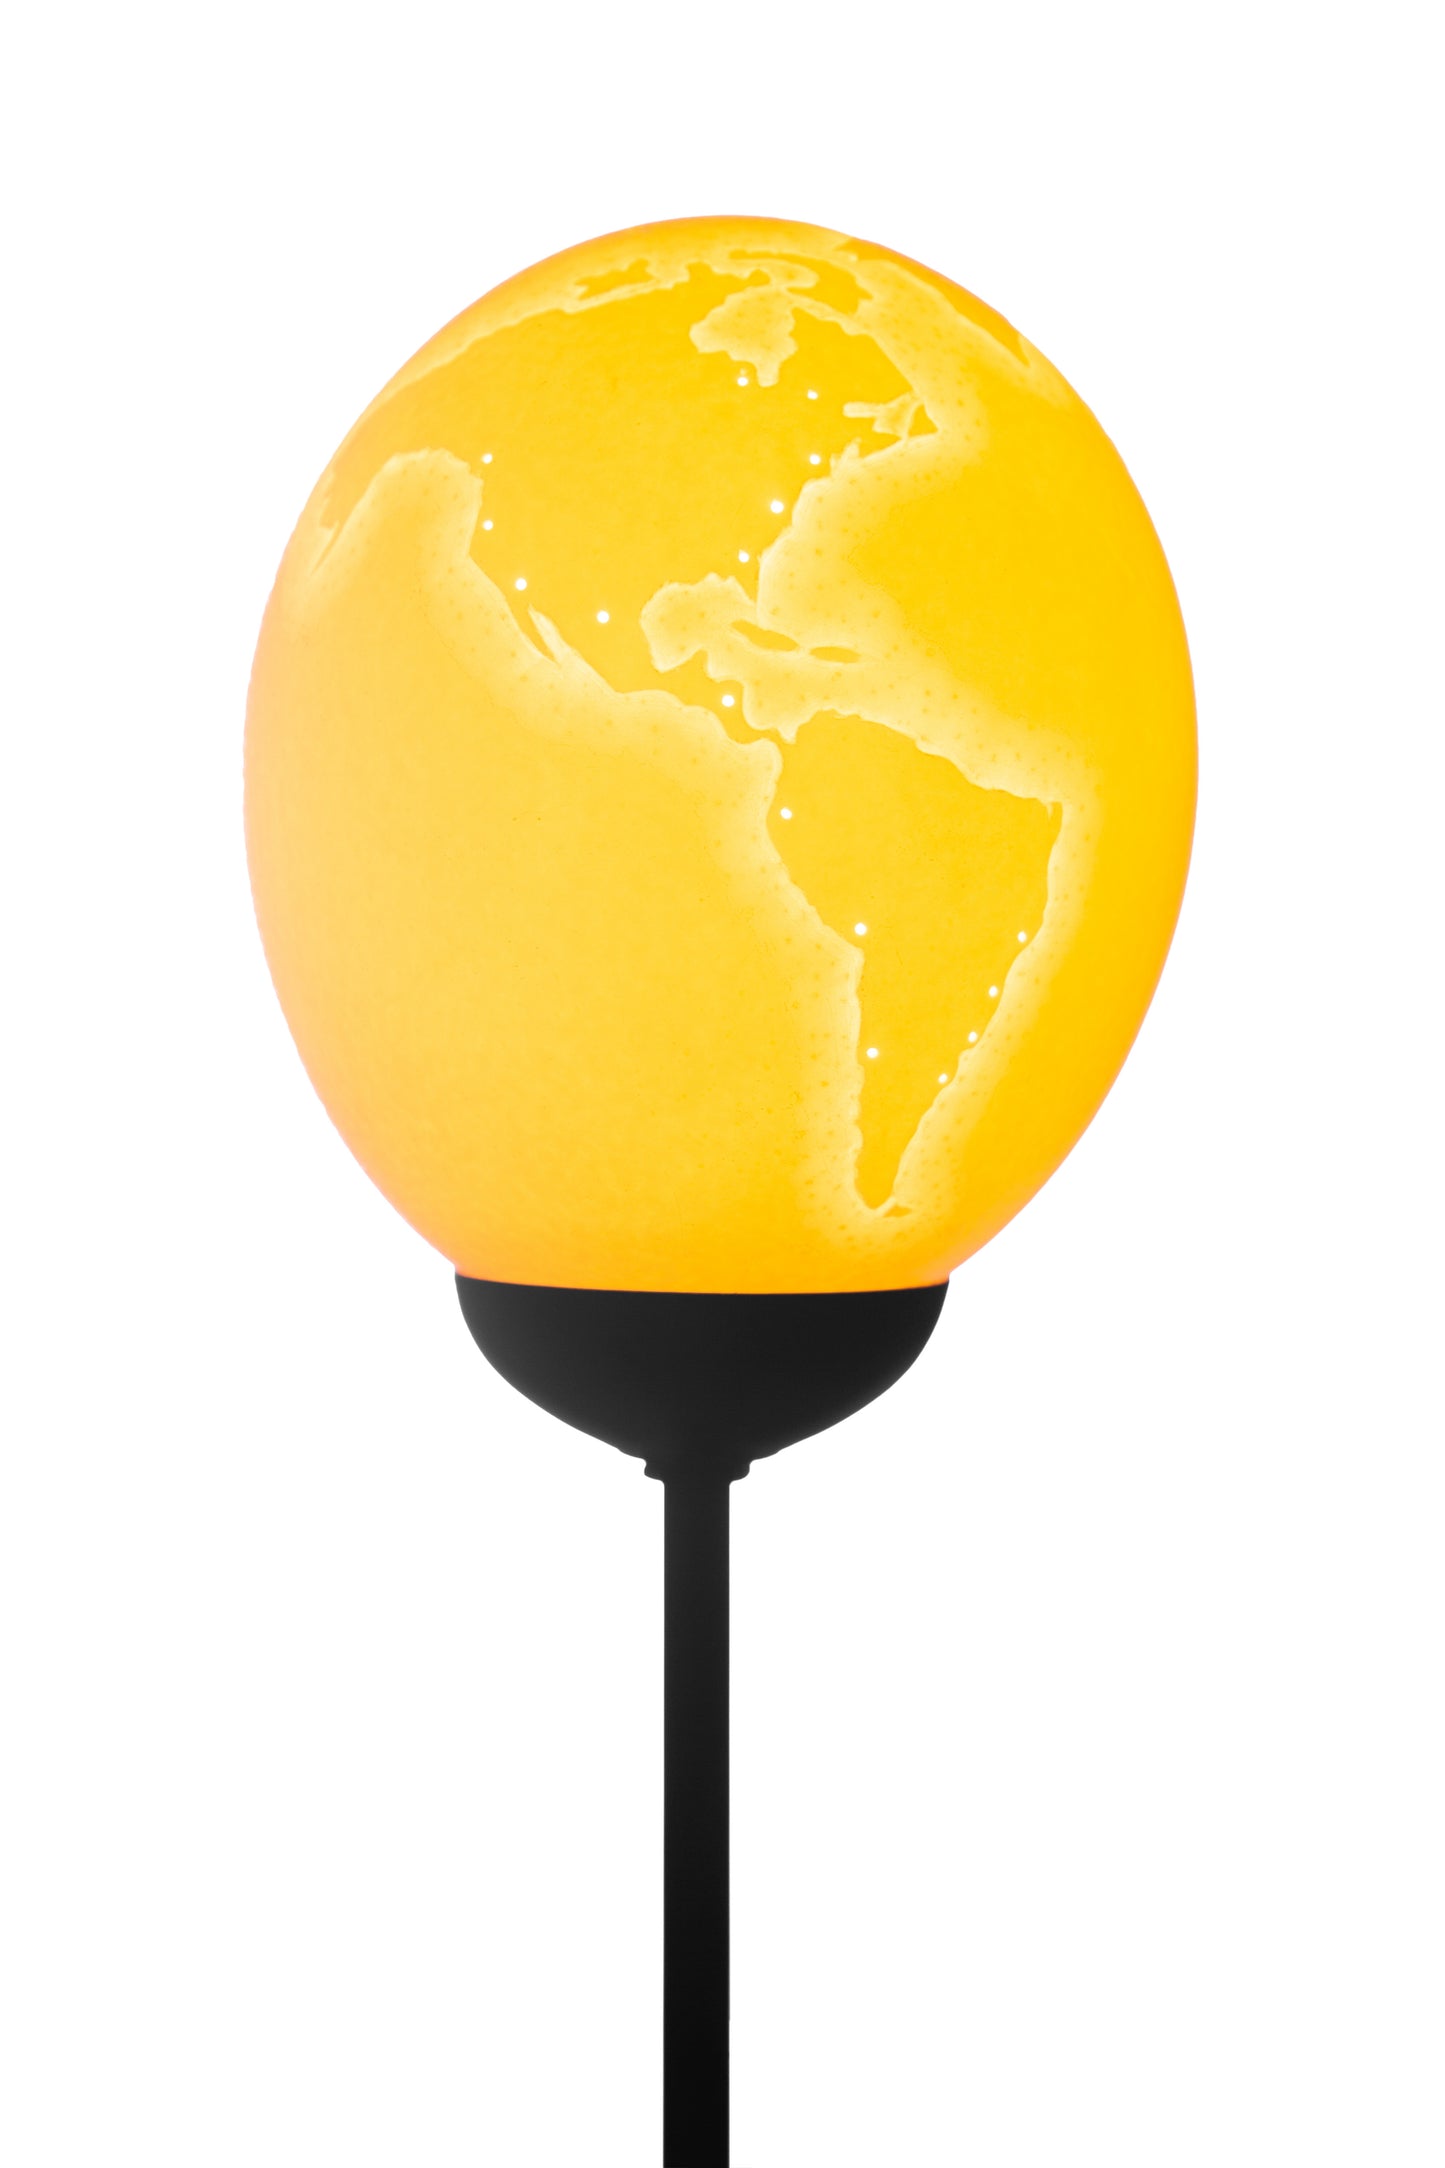 World map themed osrich egg lamp